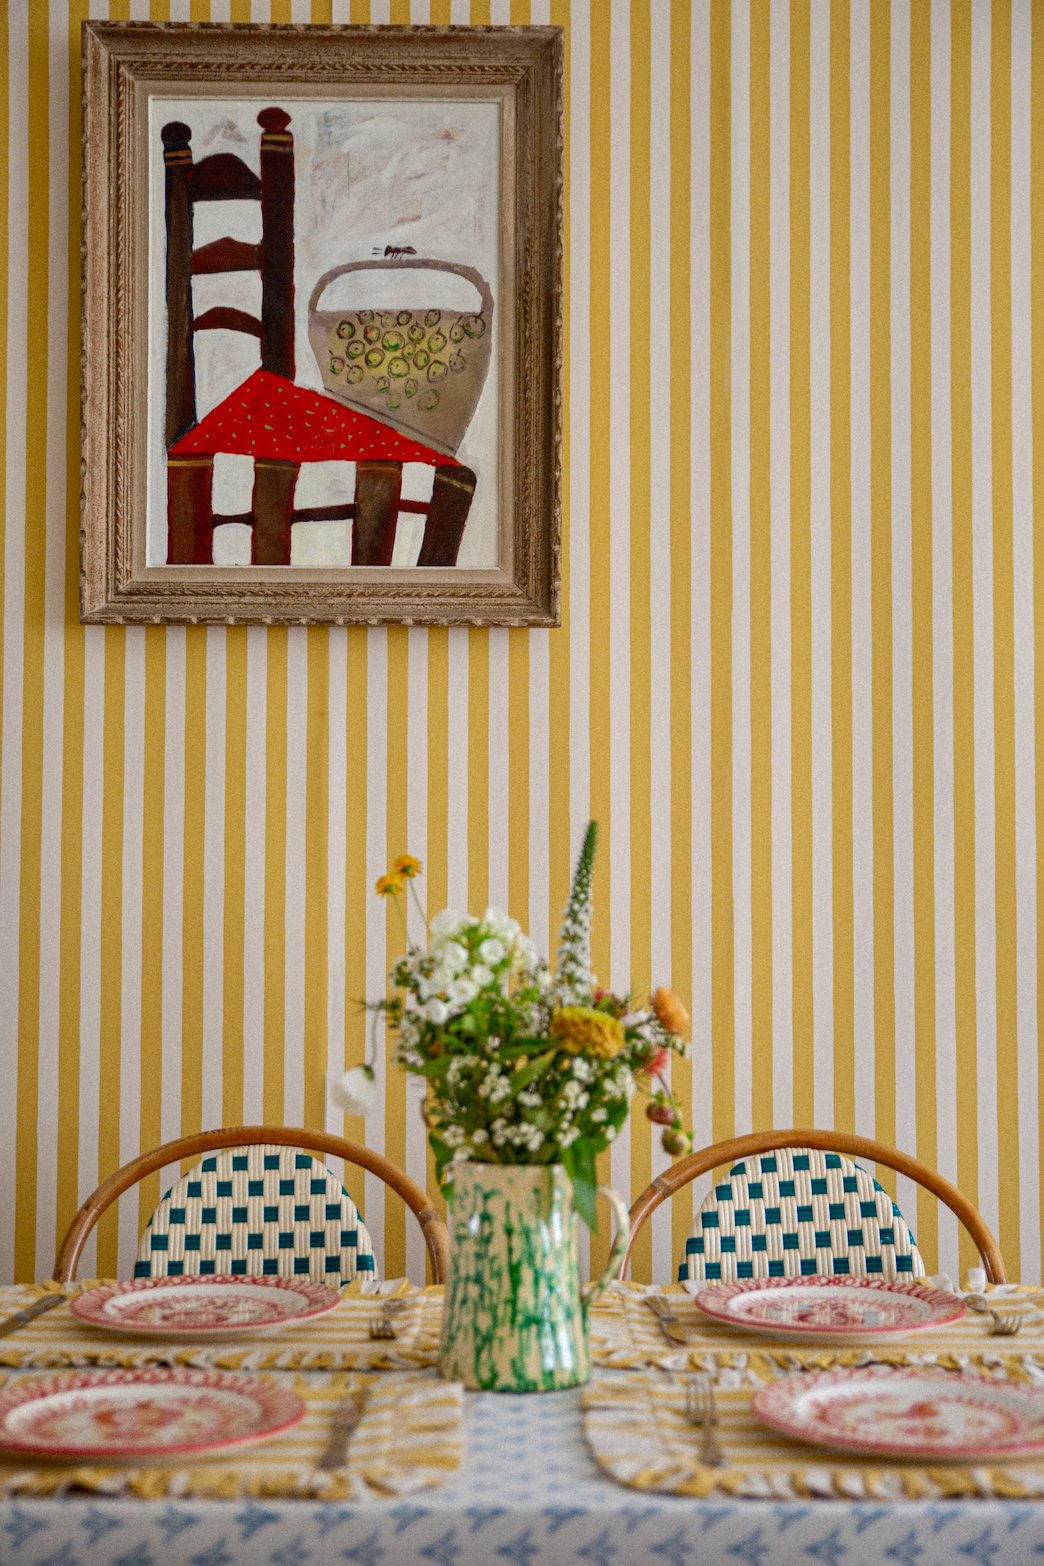 Tangier Mustard Stripe Wallpaper - Alice Palmer & Co